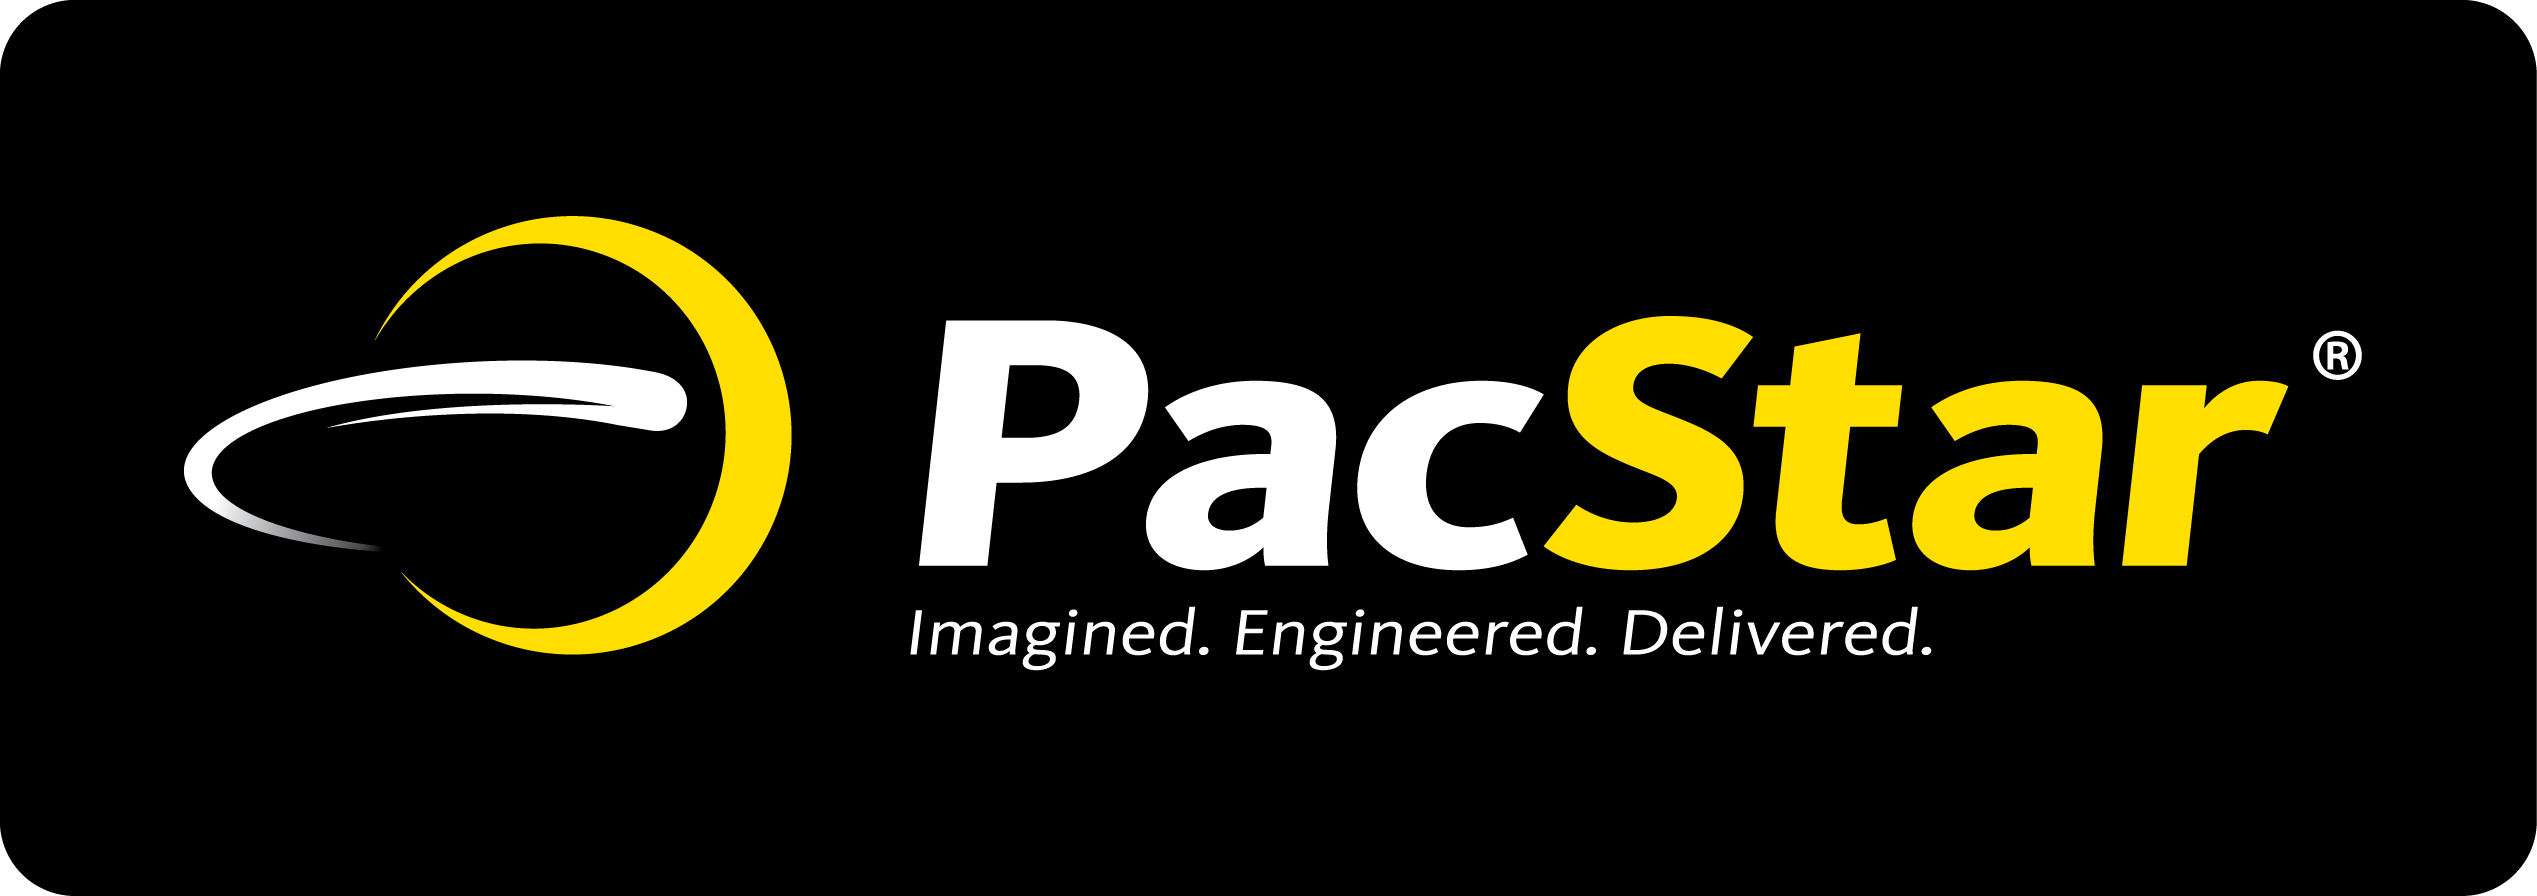 Pacific Star Communications, Inc. Company Logo